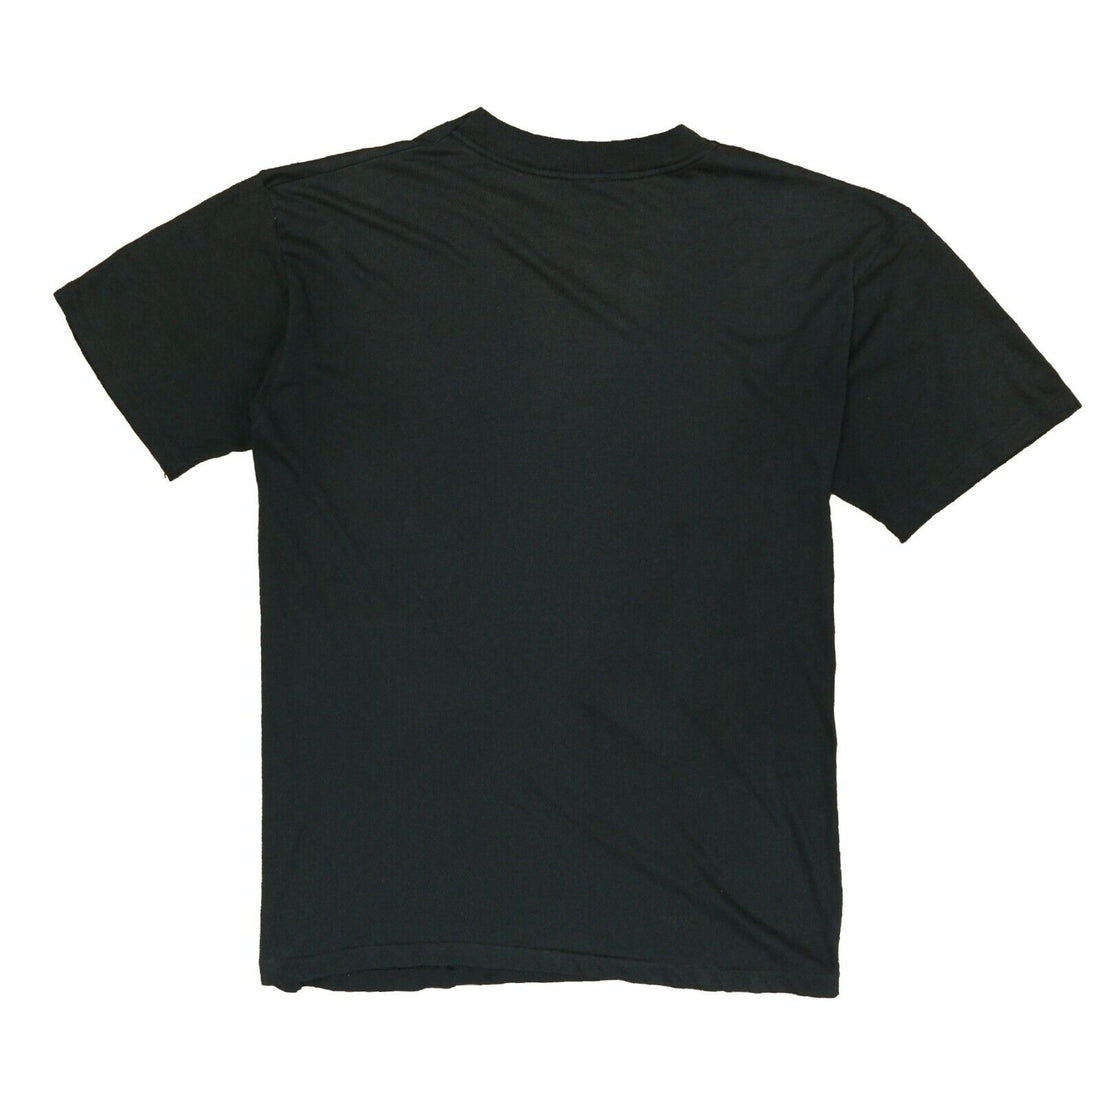 Vintage Chicago Blackhawks Taz T-Shirt Size Medium Black Cartoon 1994 90s NFL